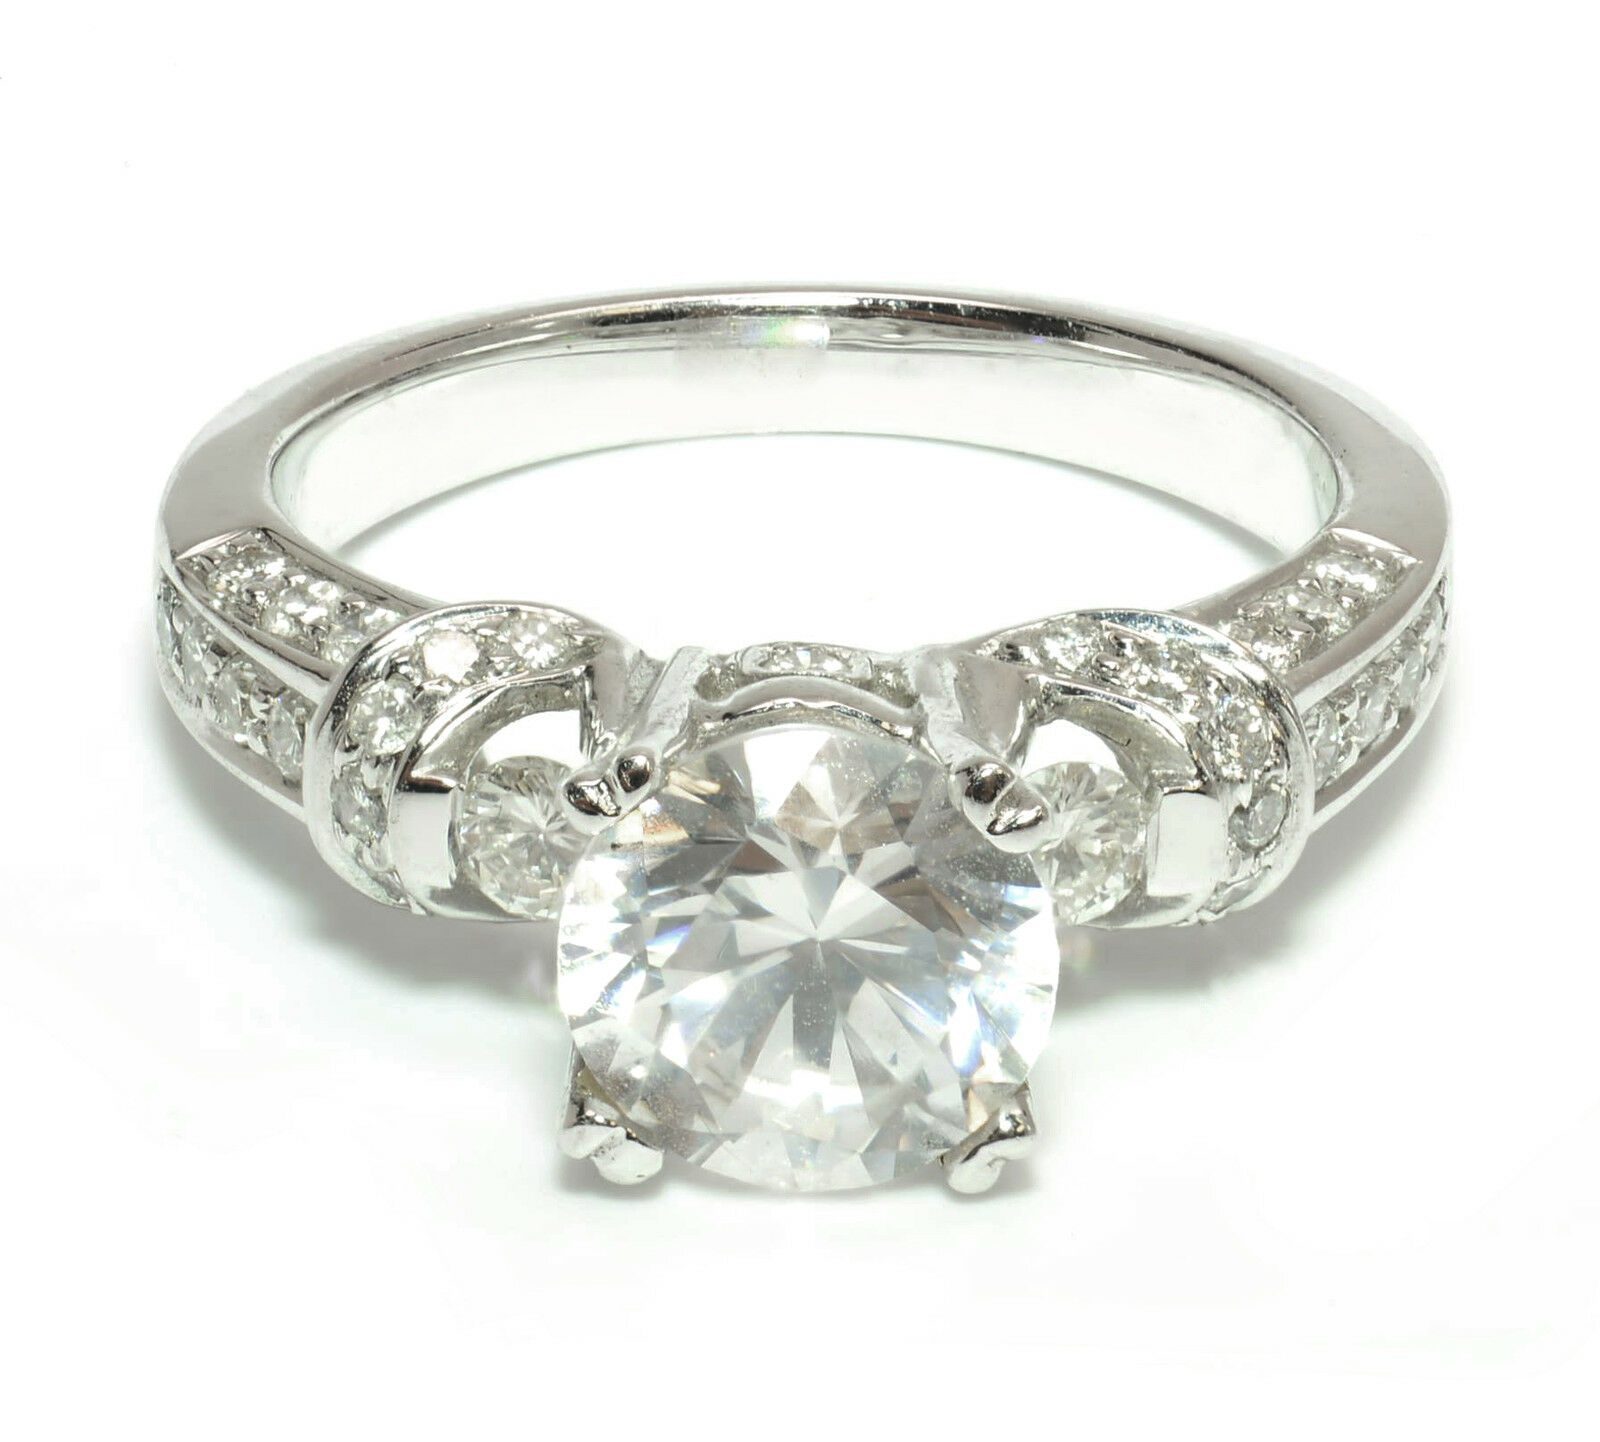 Decorative-Diamond-Engagement-Semi-Mount-Ring-in-18k-White-Gold-58-ct-TDW-131707237474